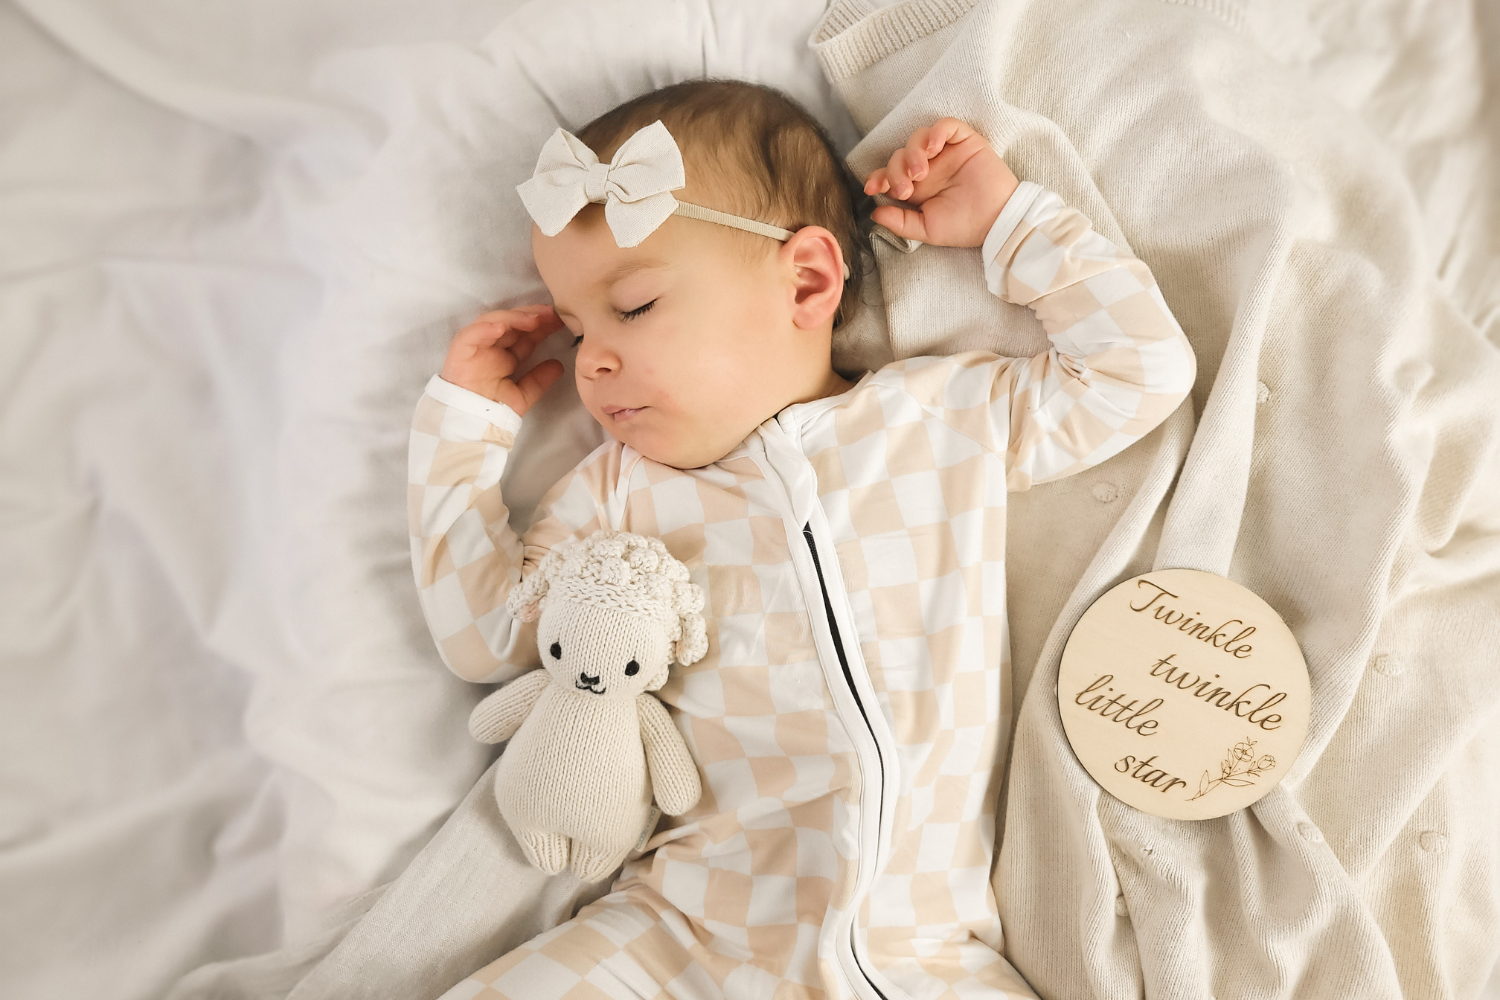 5 Tips to Help Your Baby Sleep Better